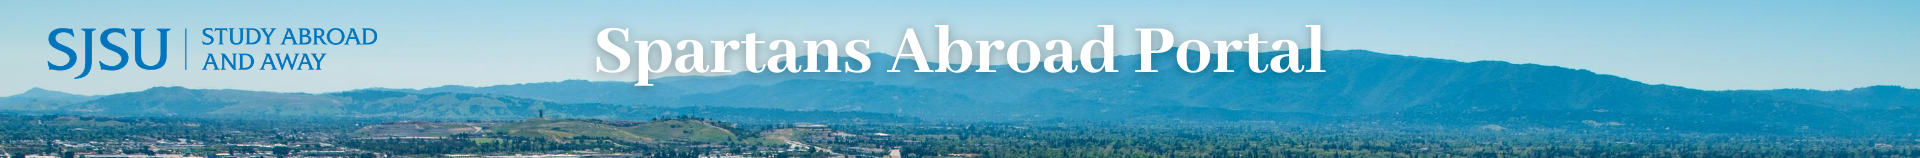 Study Abroad and Away Office - San Jose State University